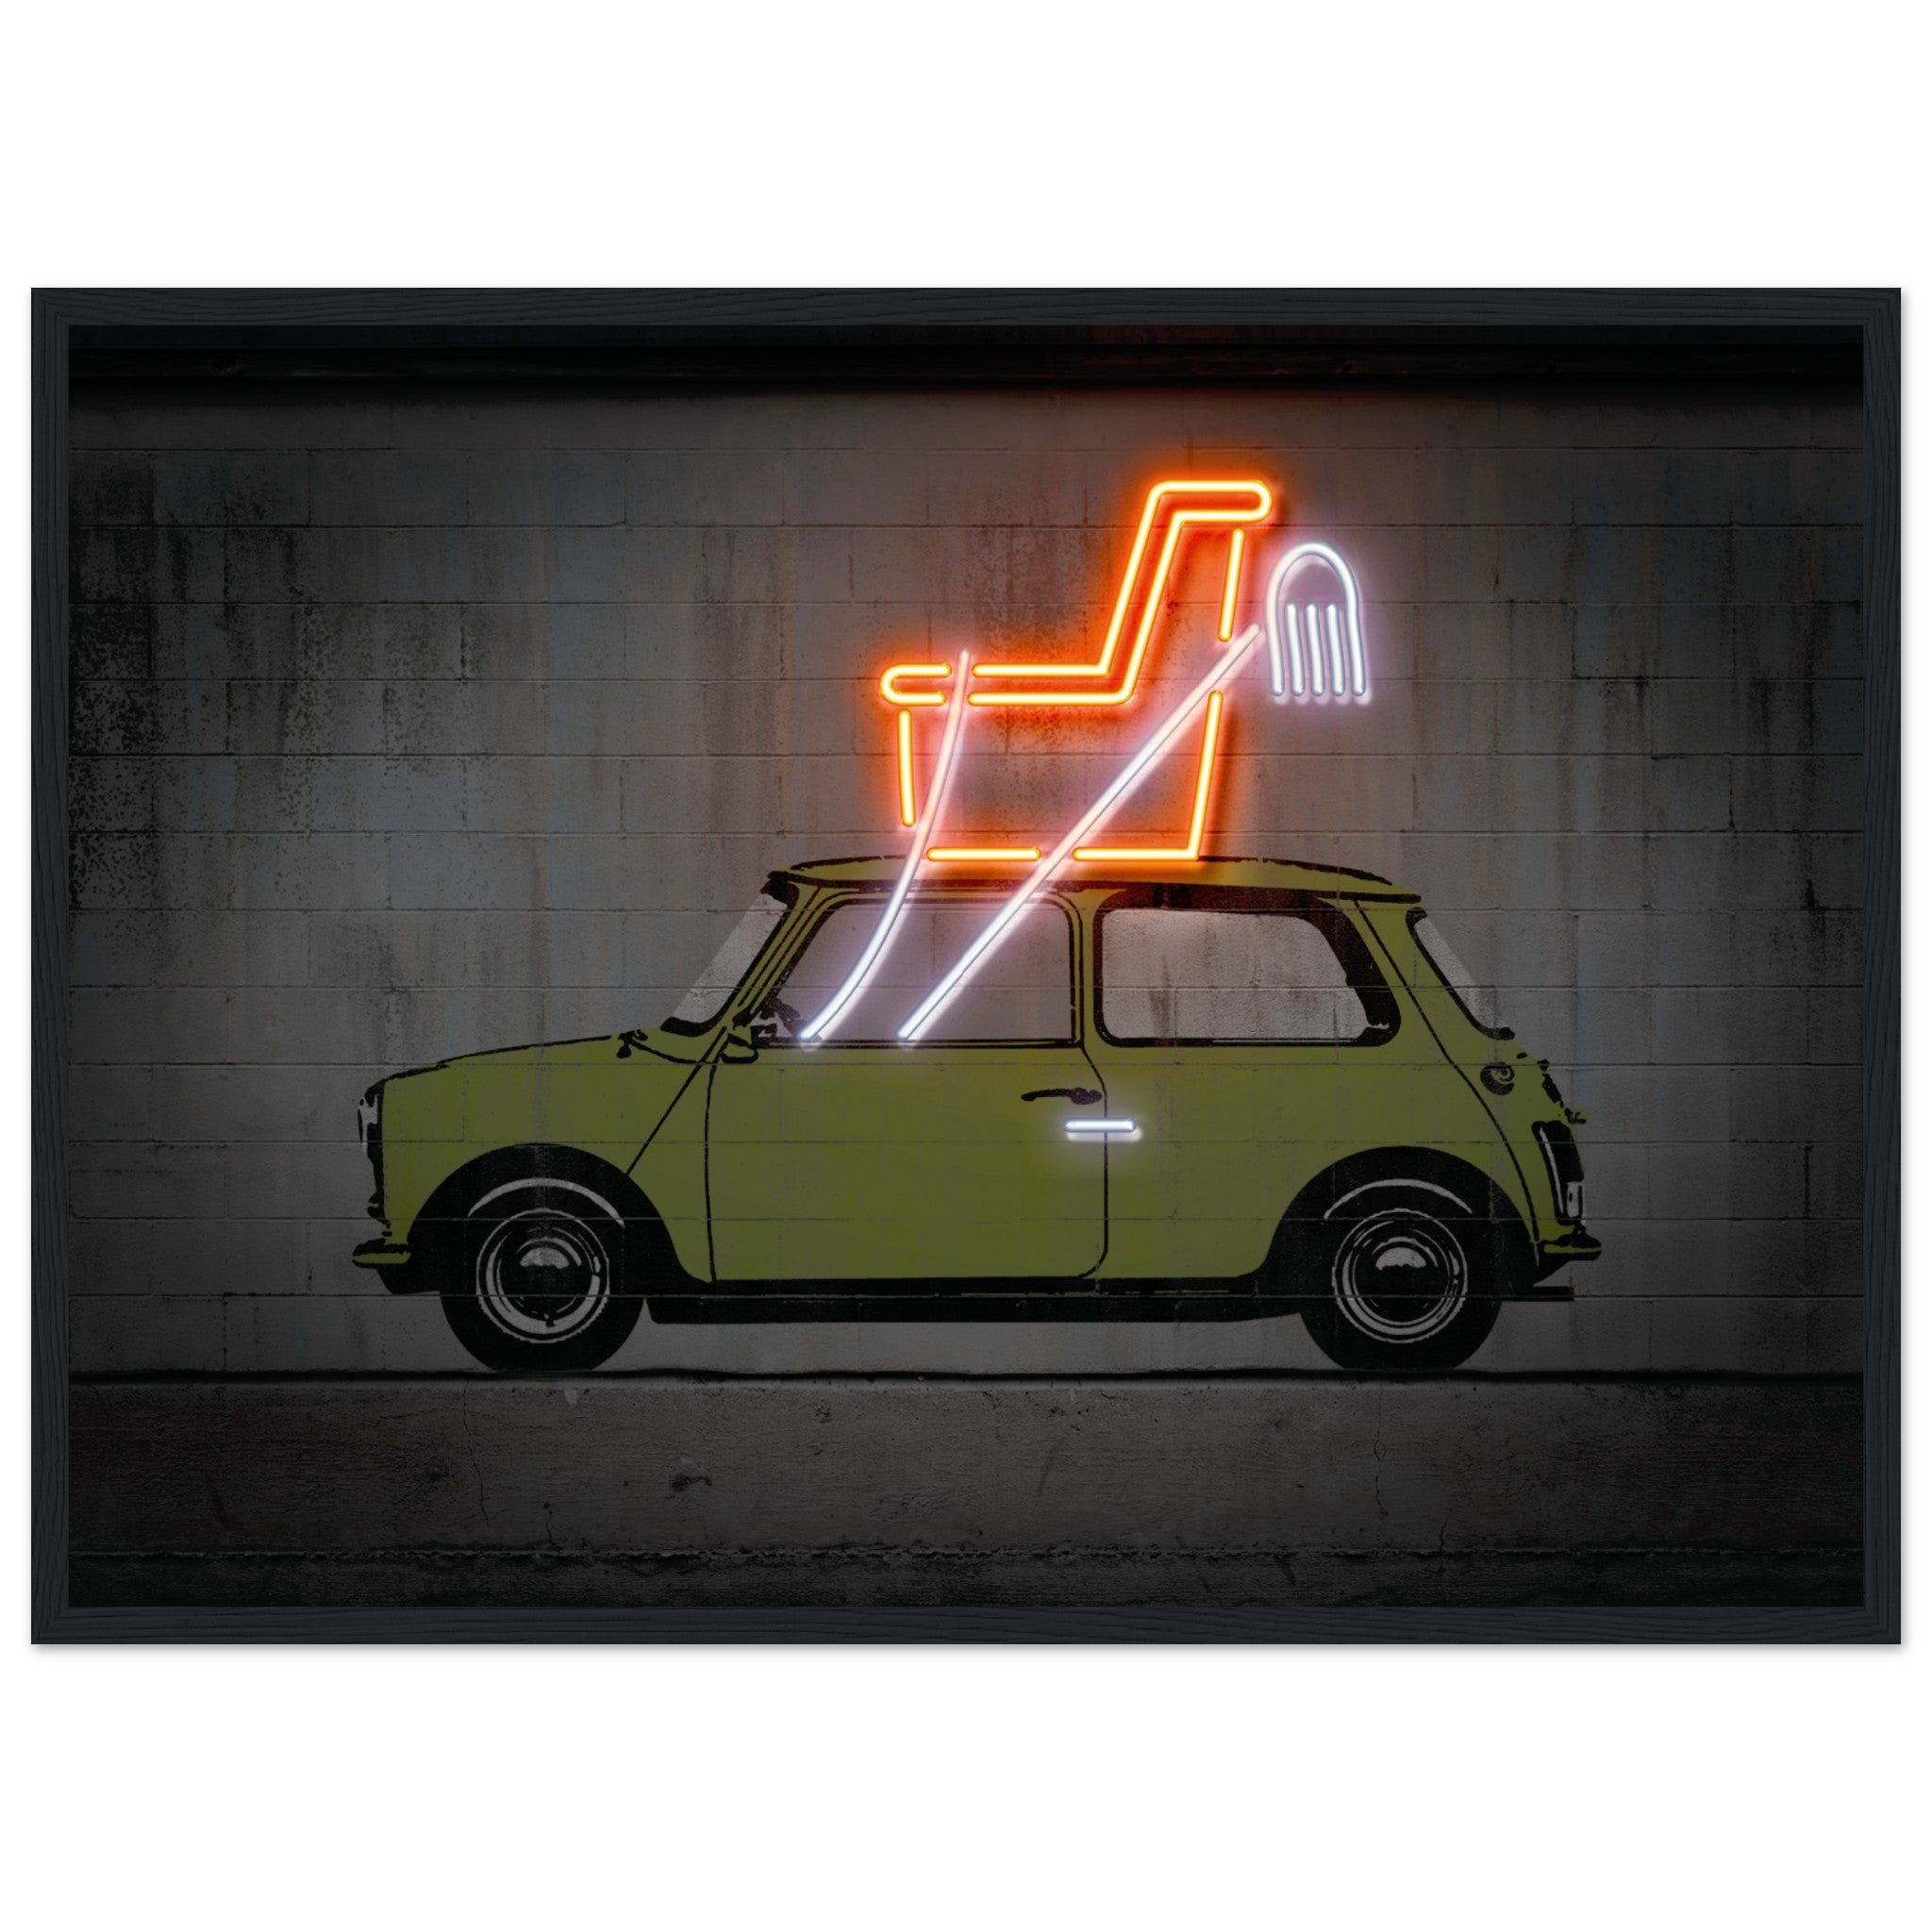 Bean Car Neon Poster